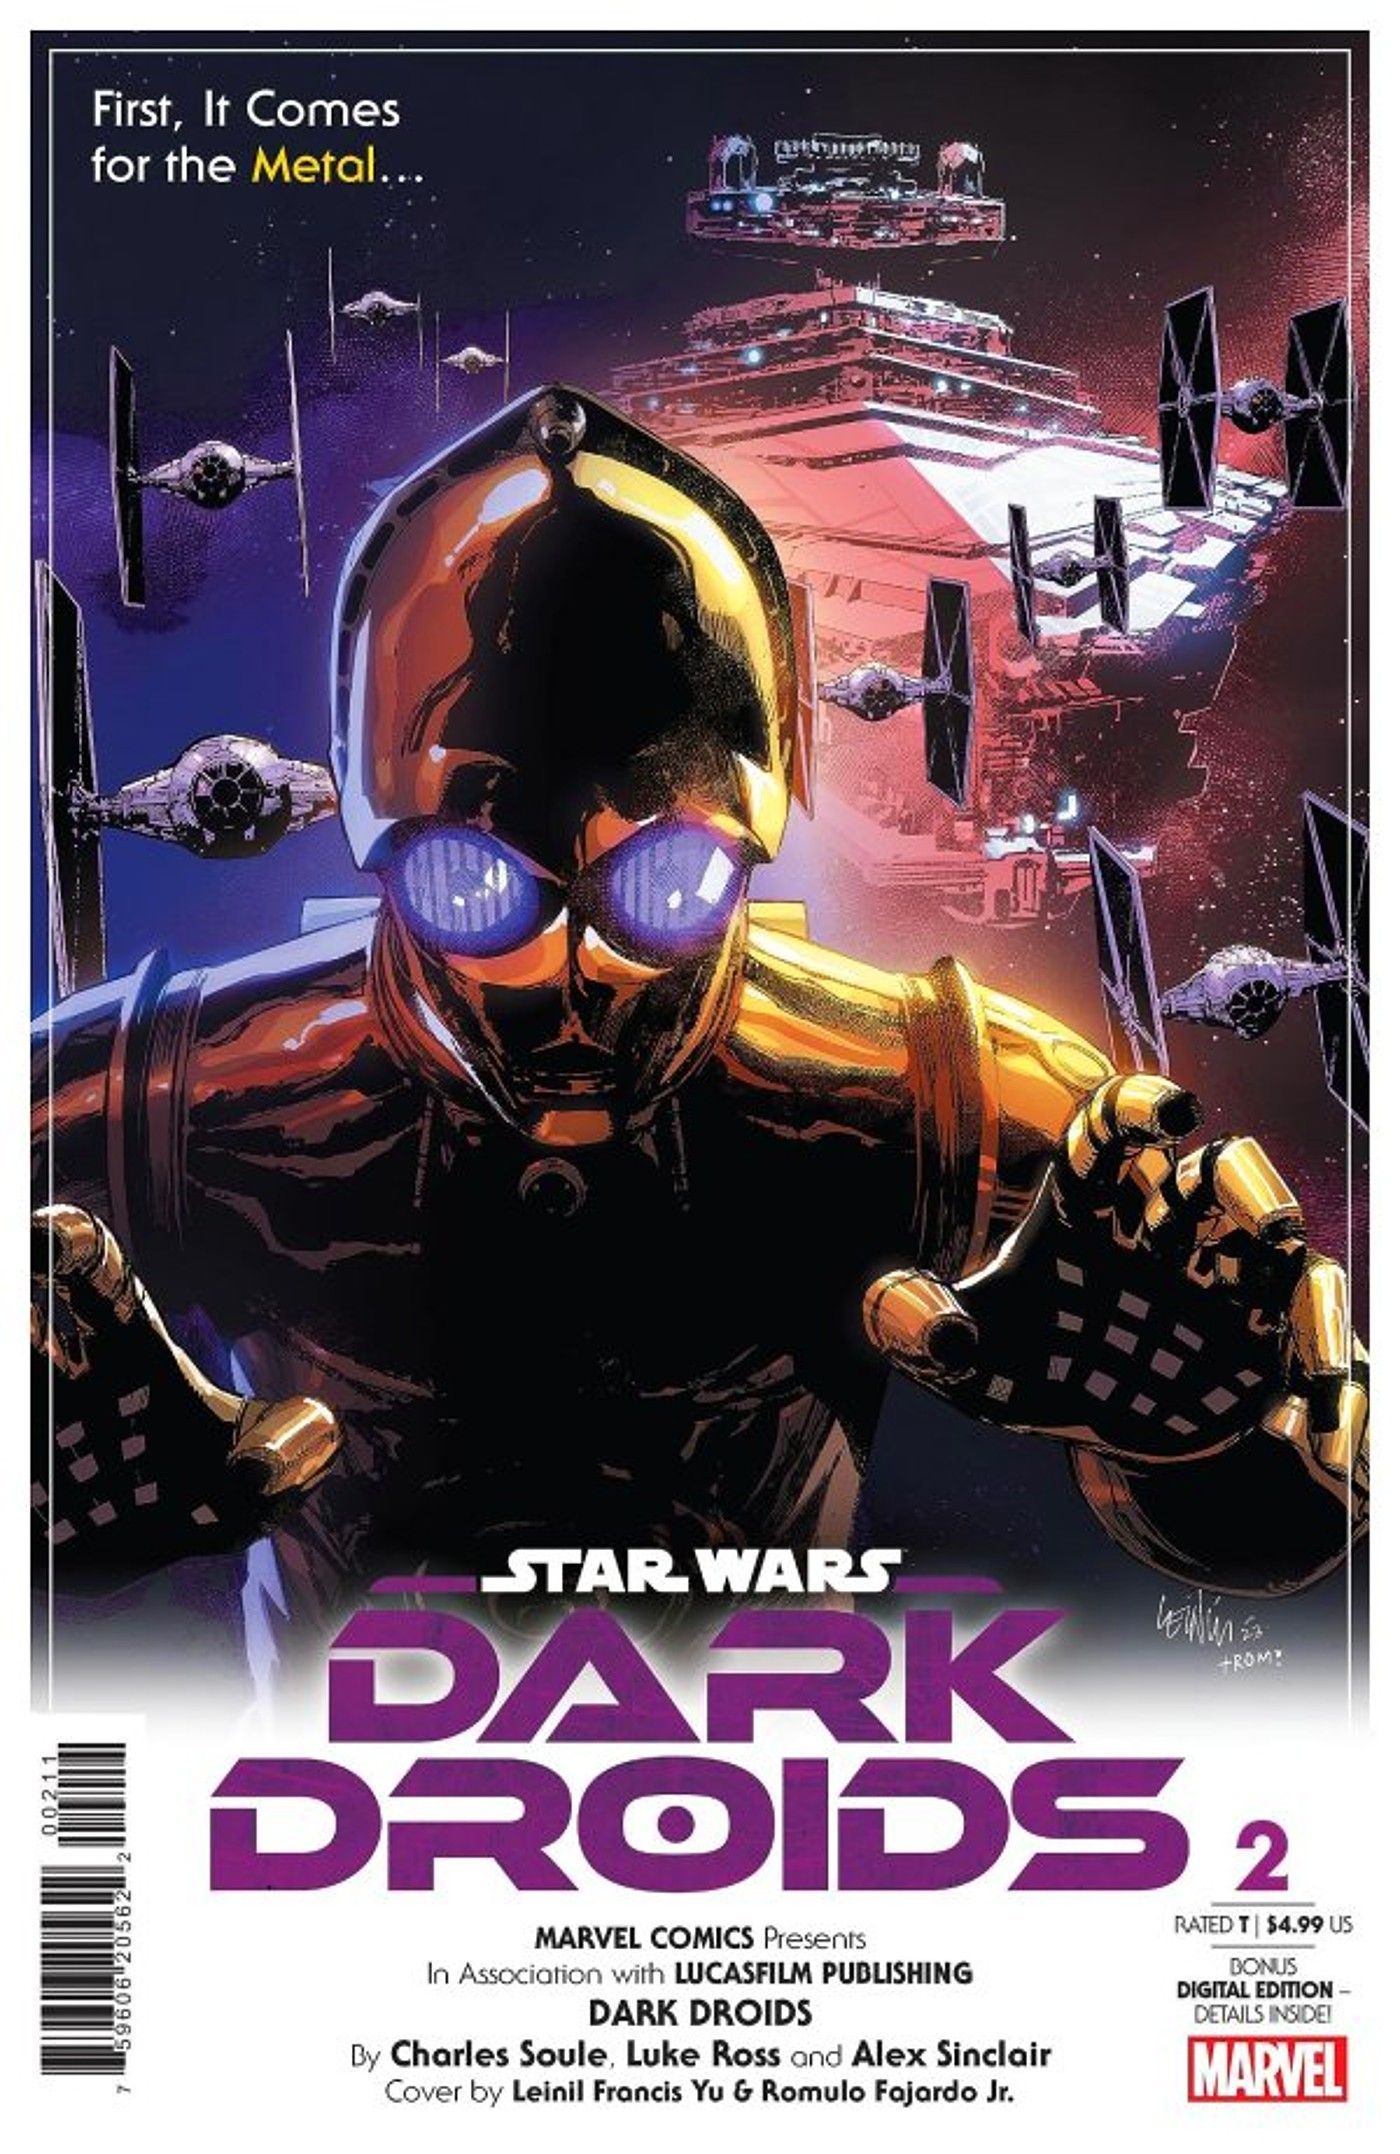 star wars dark droids 2 cover art